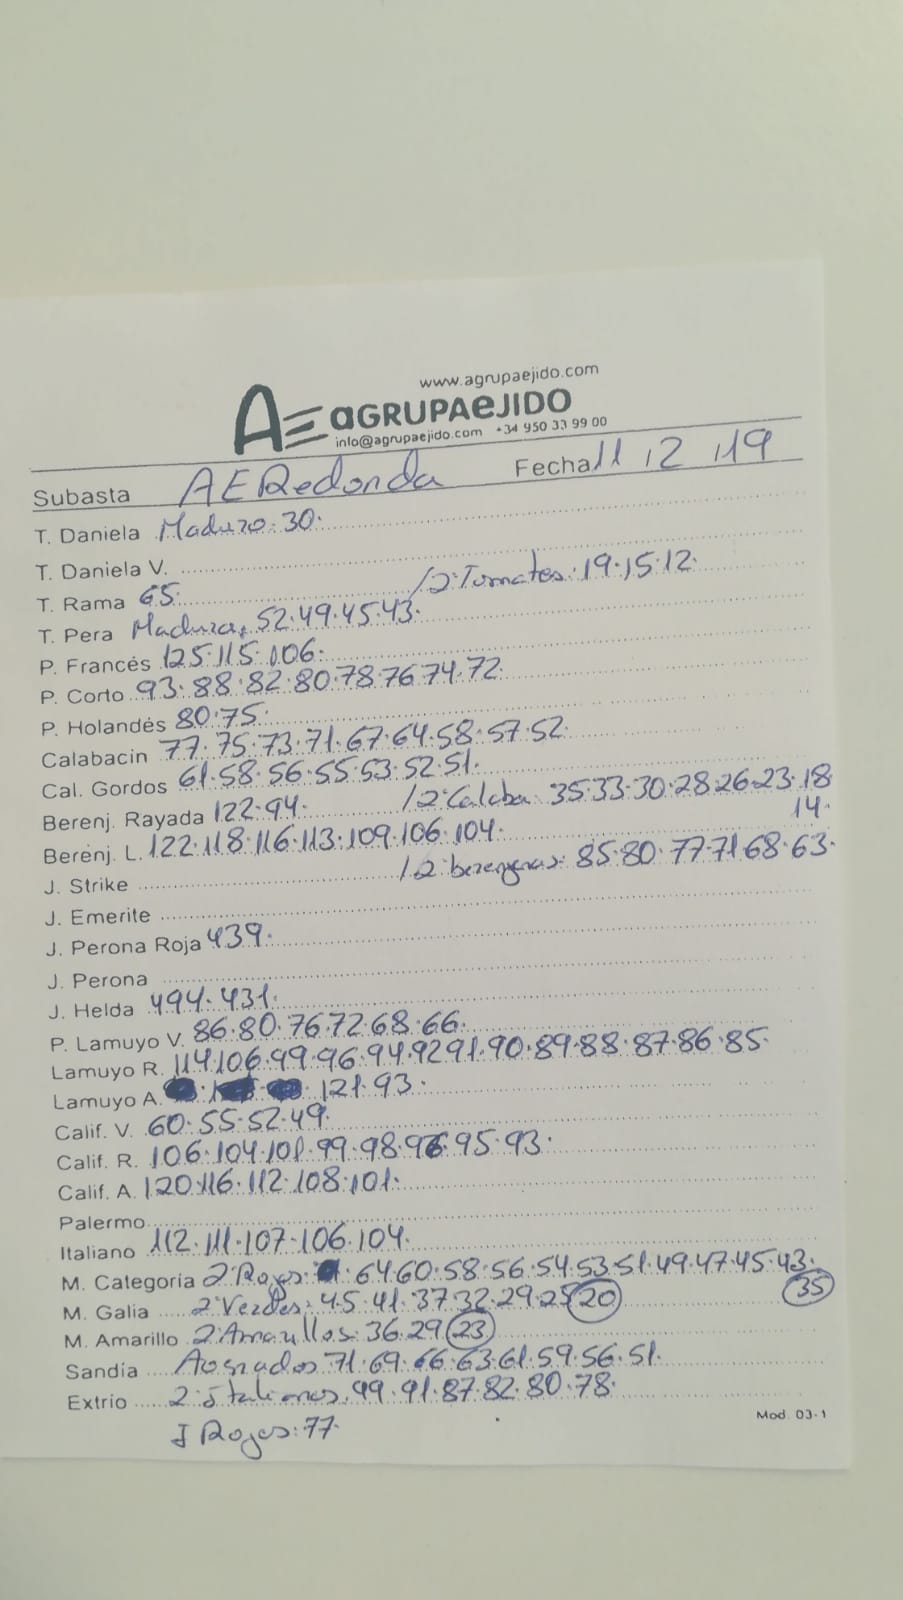 Subasta hortofrutícola AgrupaEjido La Redonda 11 de Febrero 2019